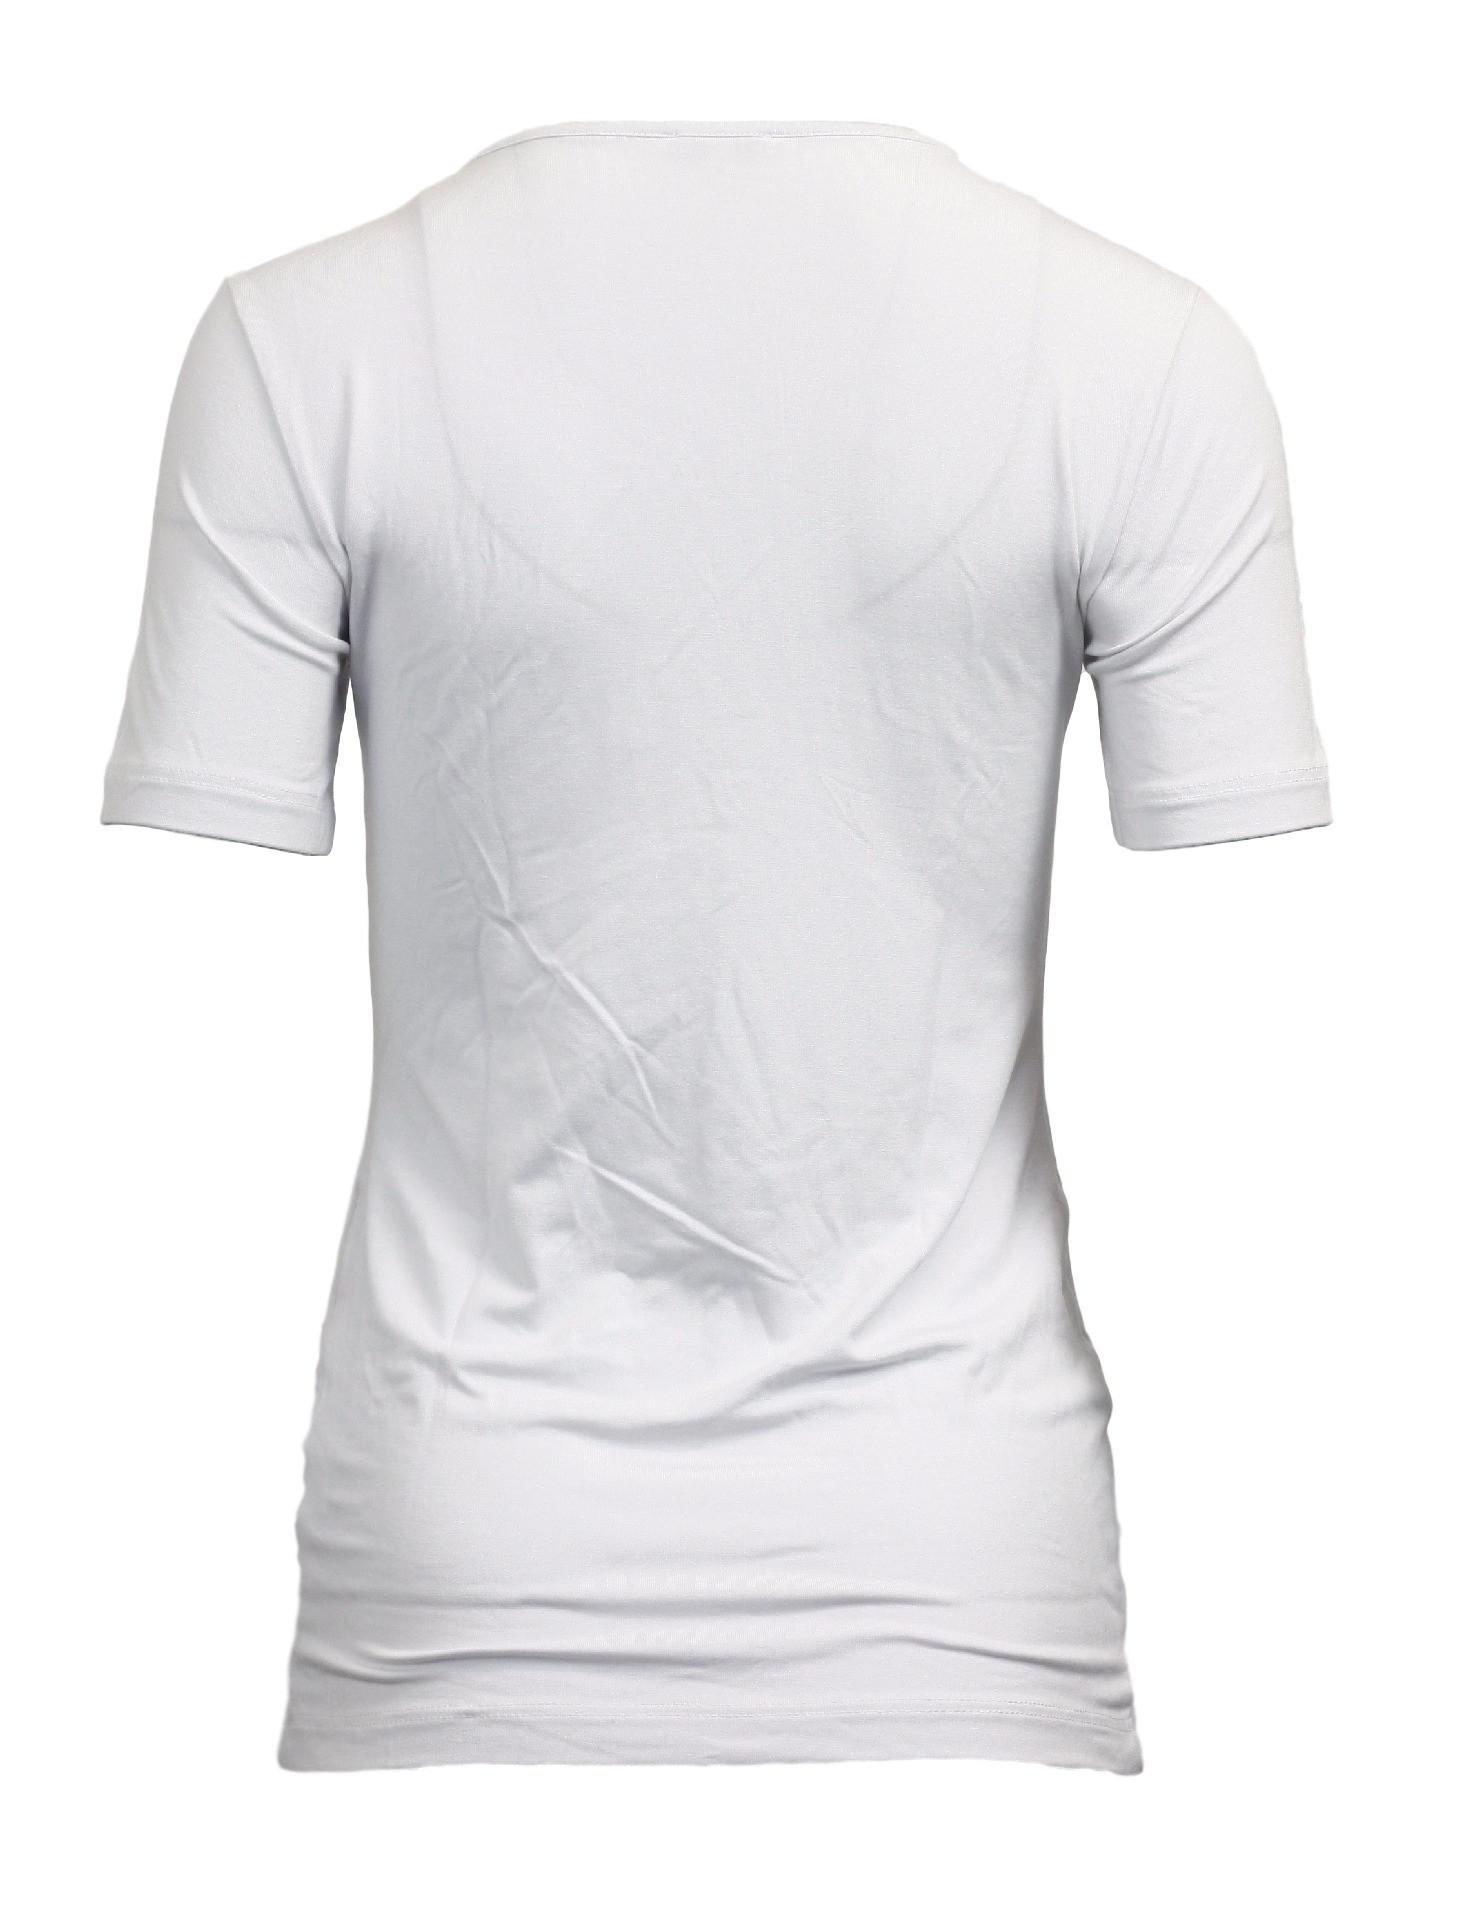 Dámské tričko Linaka kr - Favab bílá L